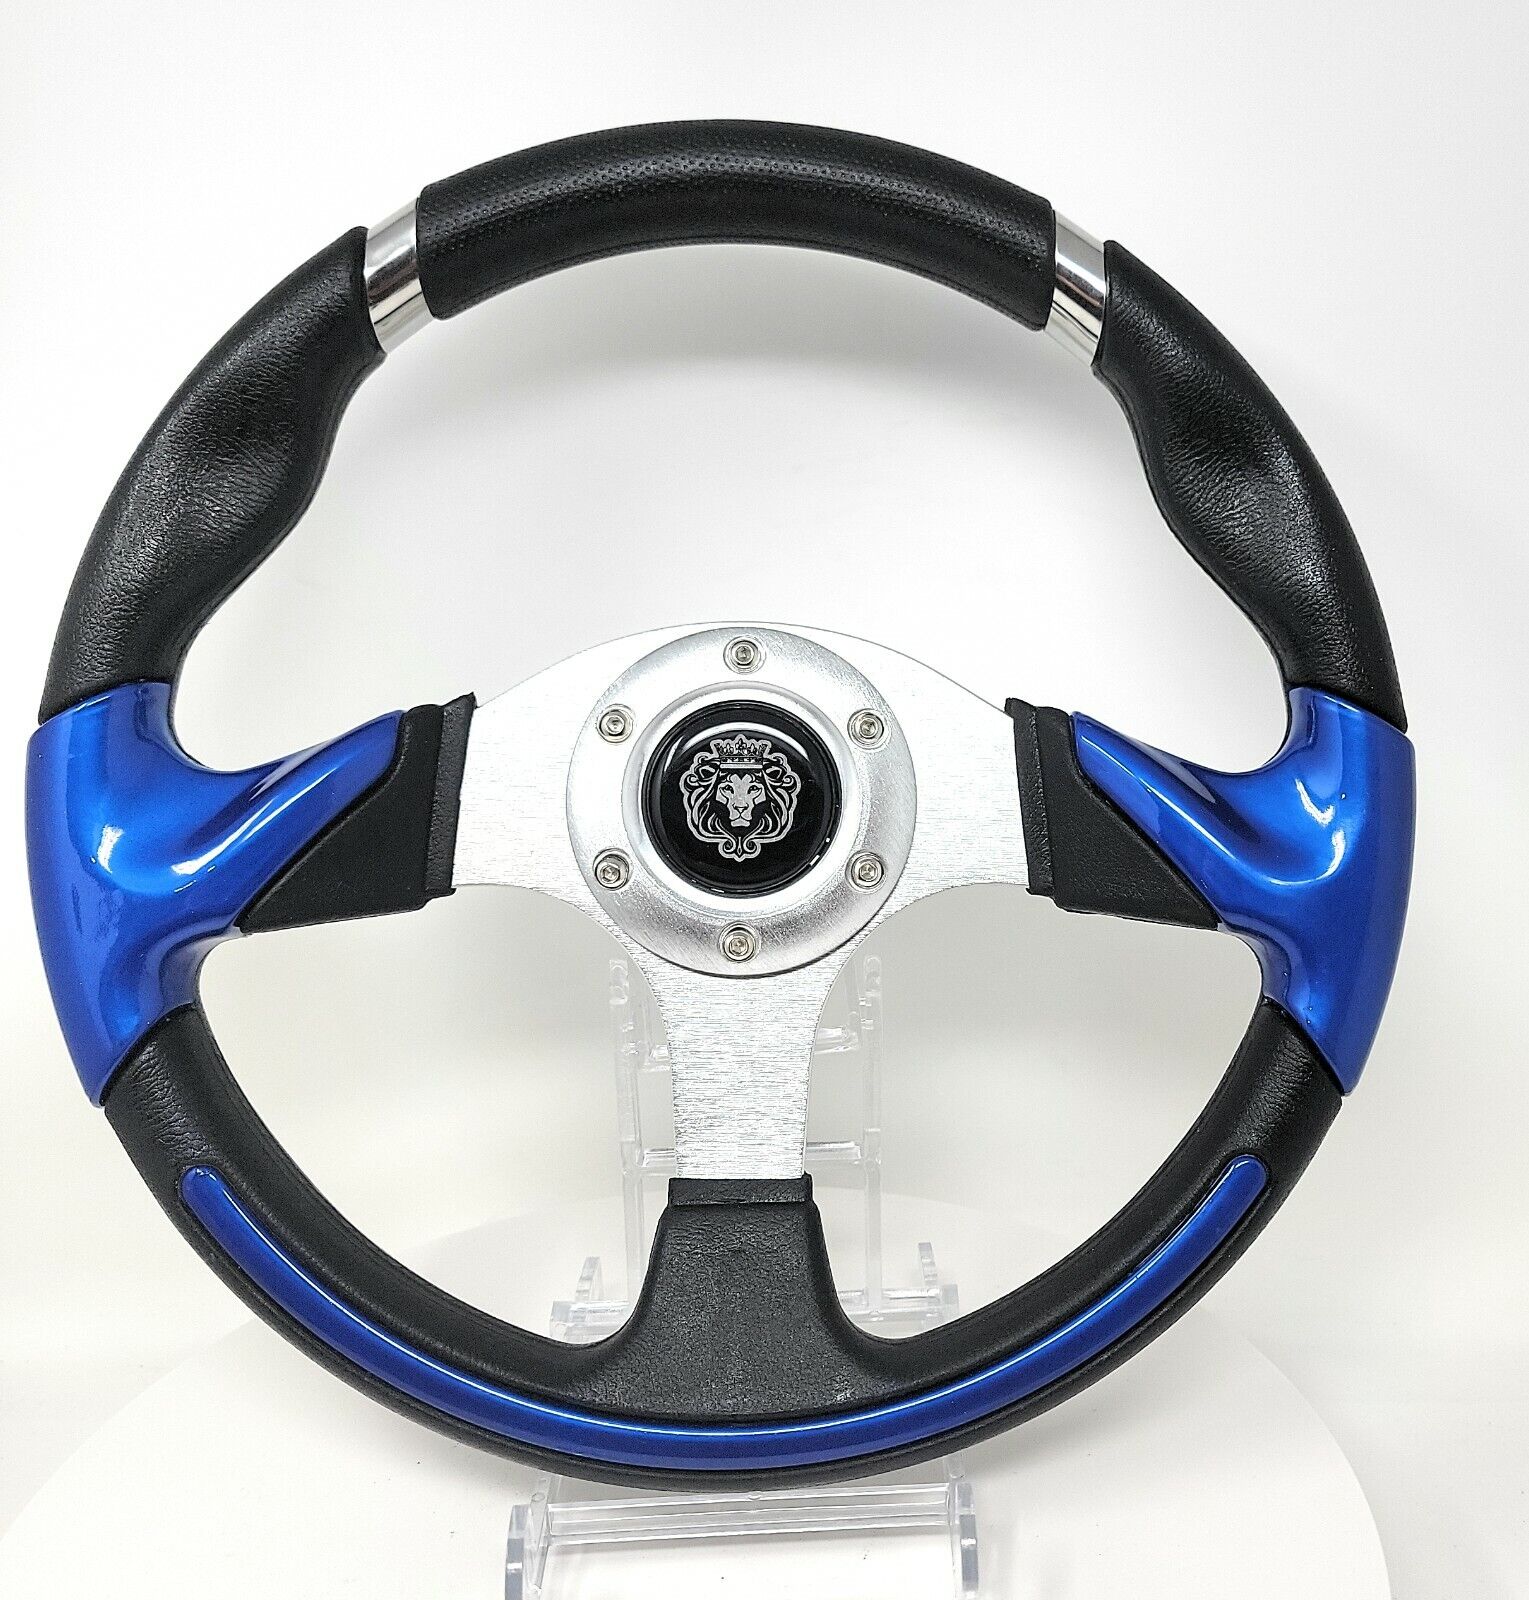 Ez-go 4 POLARIS Ranger steering wheel golf cart W/ Adapter 3 spoke Club Car BLUE